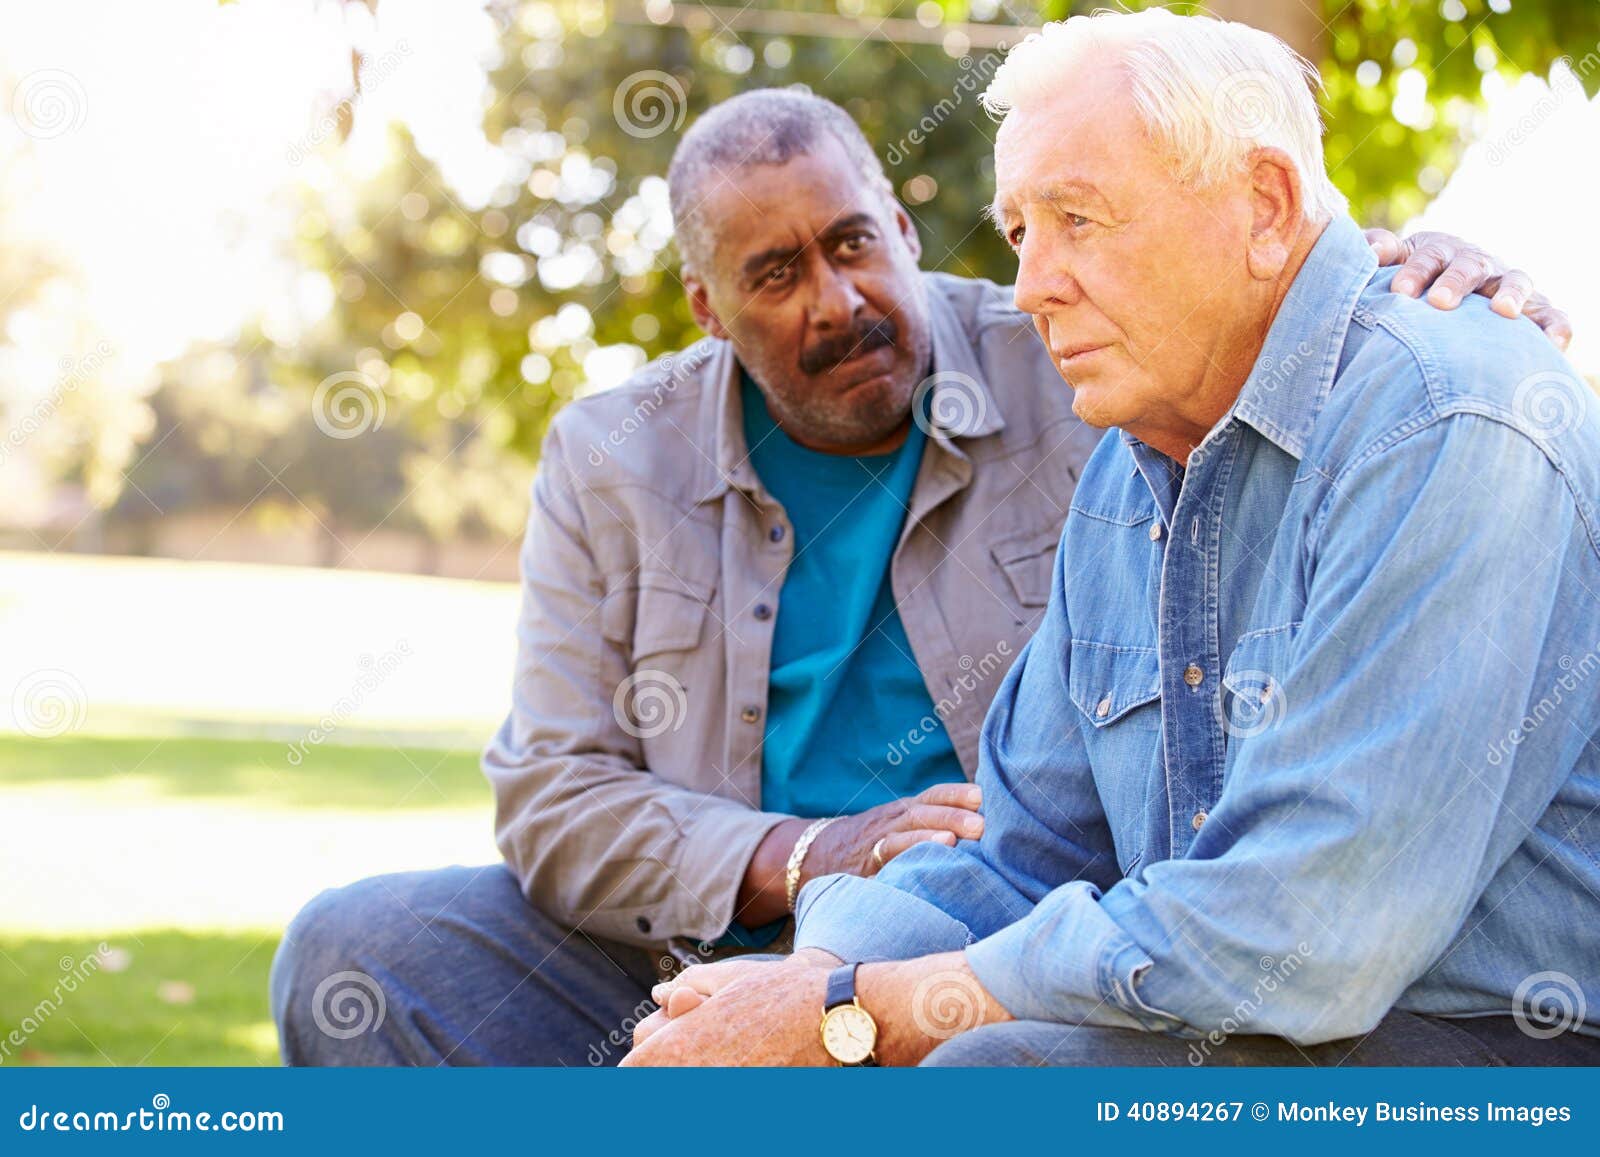 man comforting unhappy senior friend outdoors